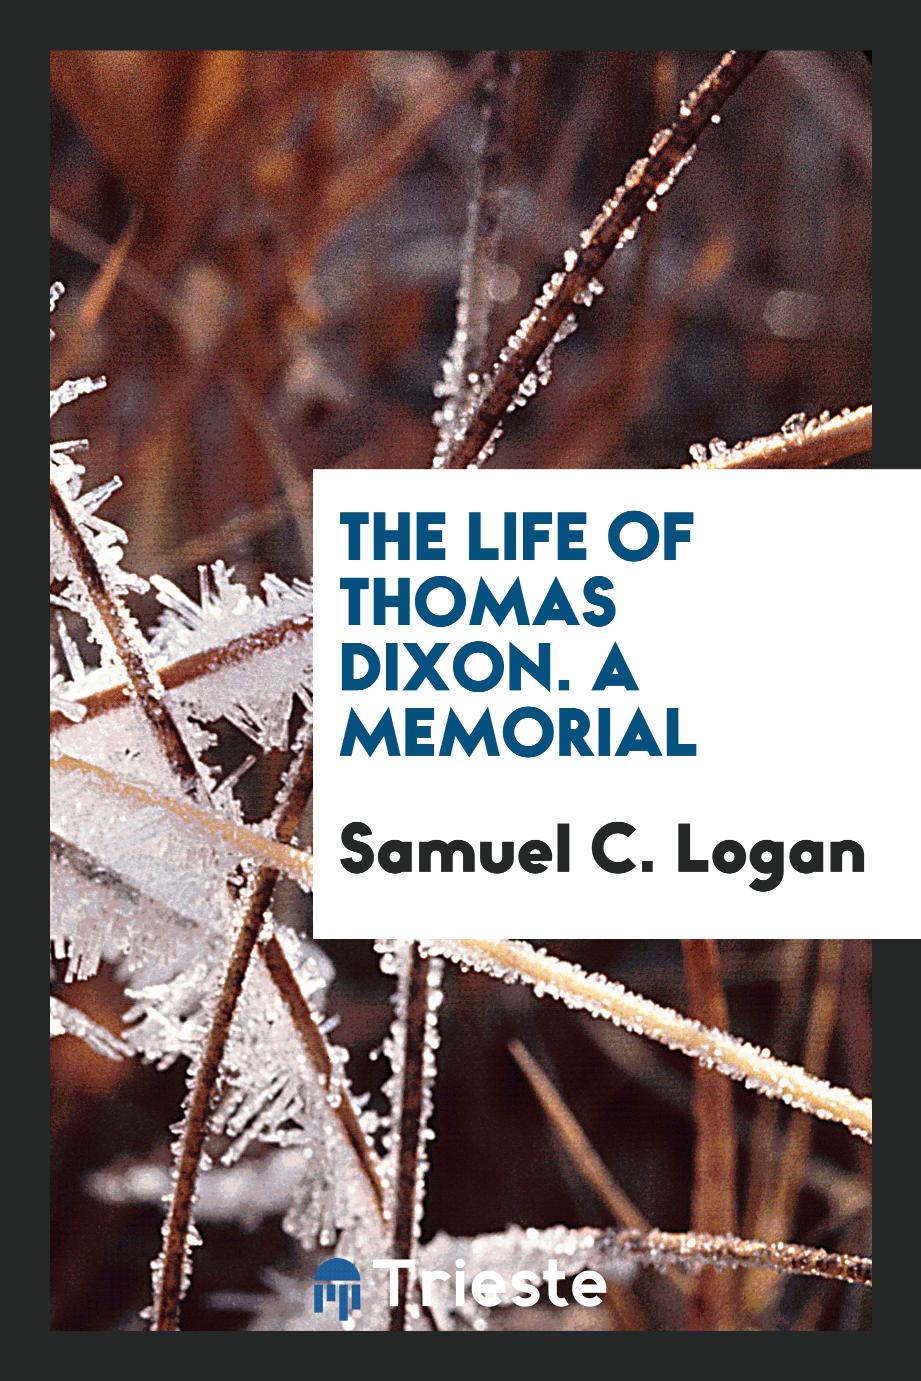 The life of Thomas Dixon. A memorial